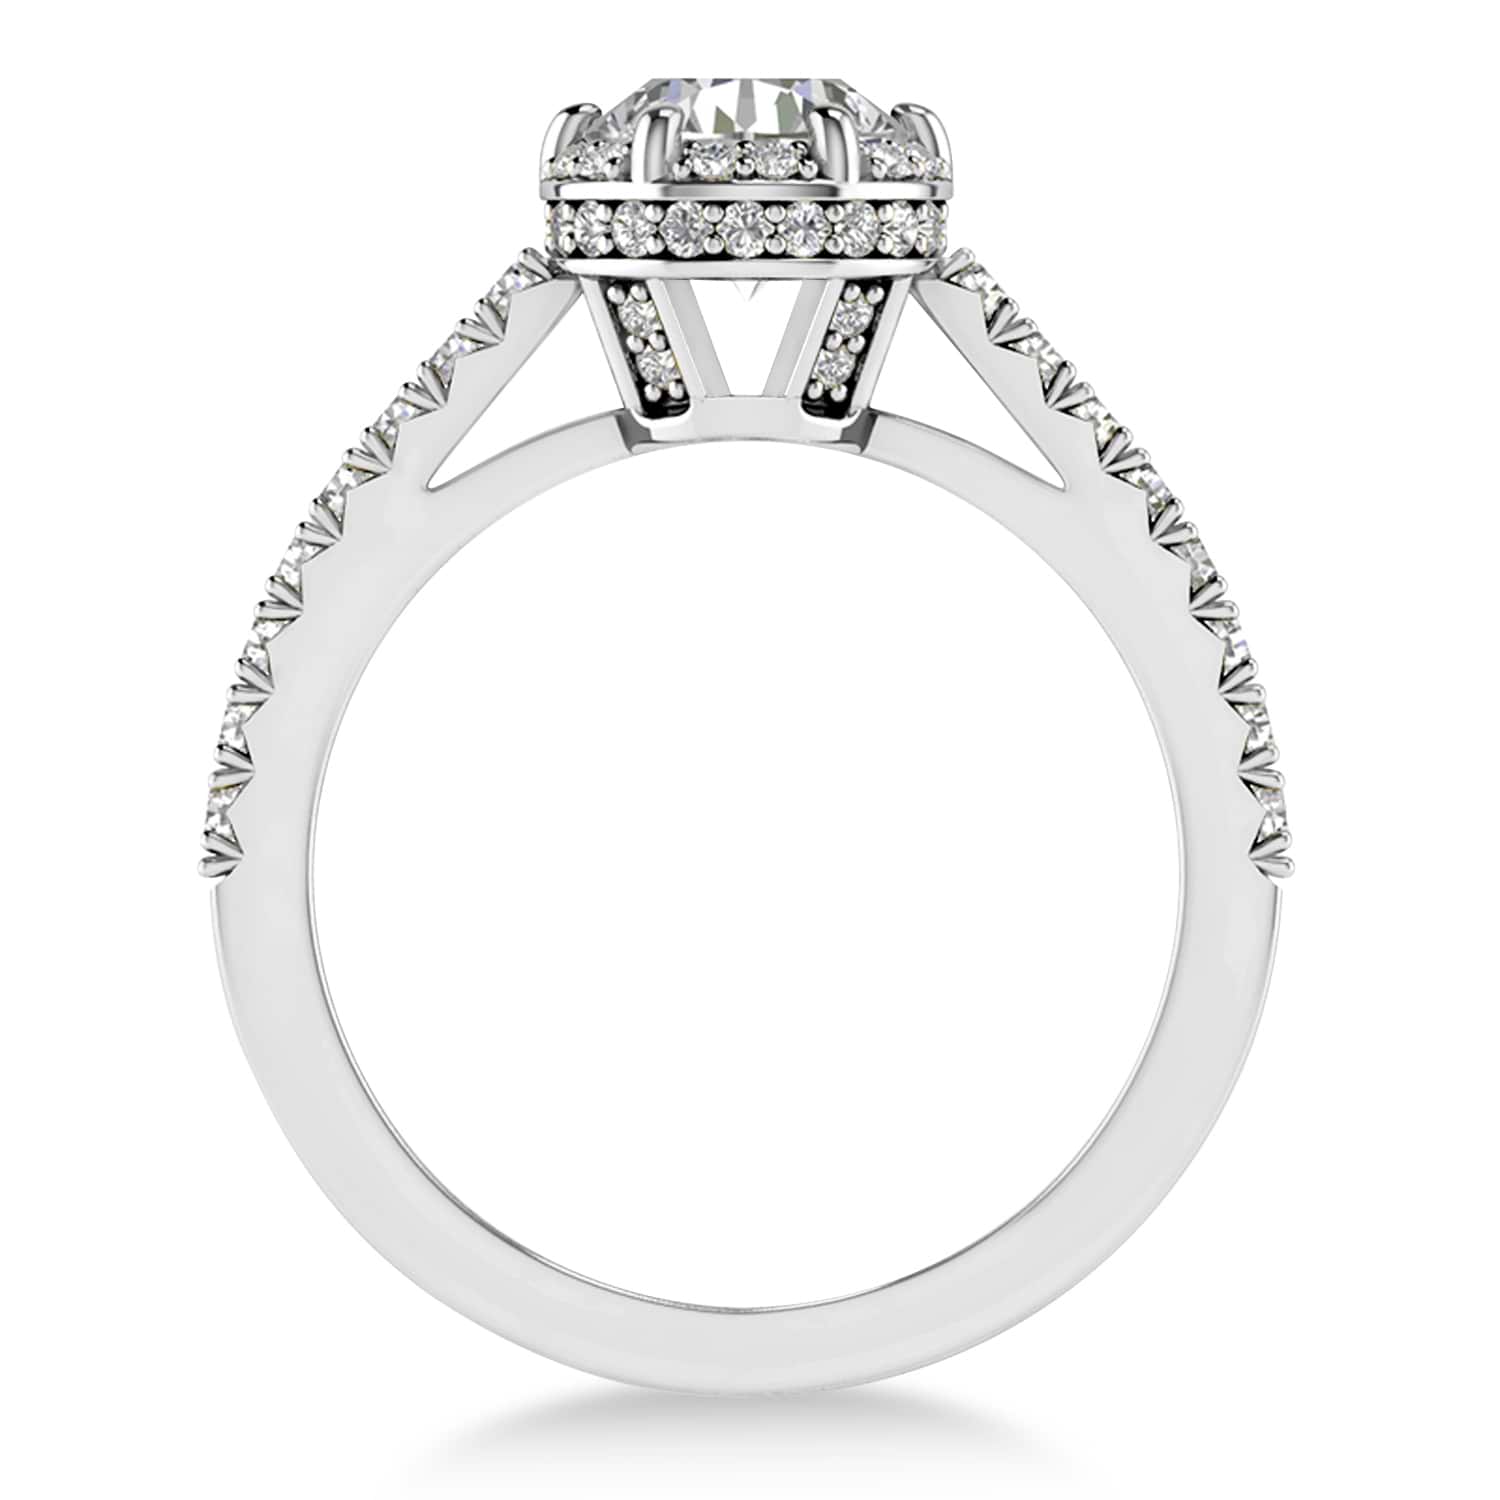 Diamond Sidestones Engagement Ring 14k White Gold (0.44ct)